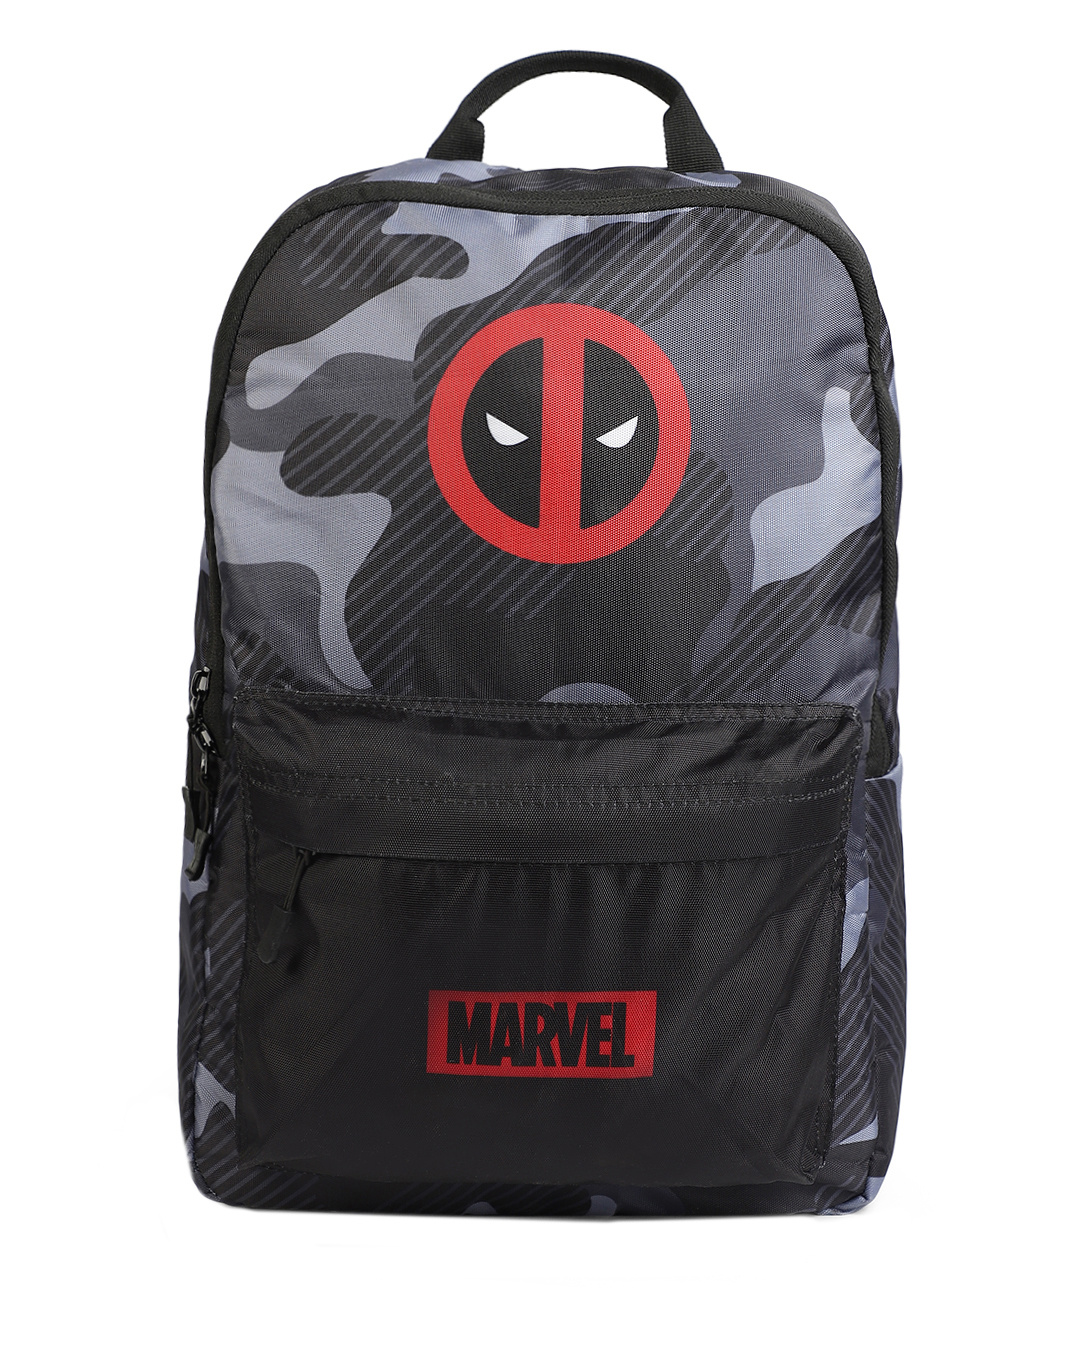 Deadpool Backpack Set 4 Piece School Bag Lunch Bag Crossbody Bag Pen Bag  Gift3  eBay